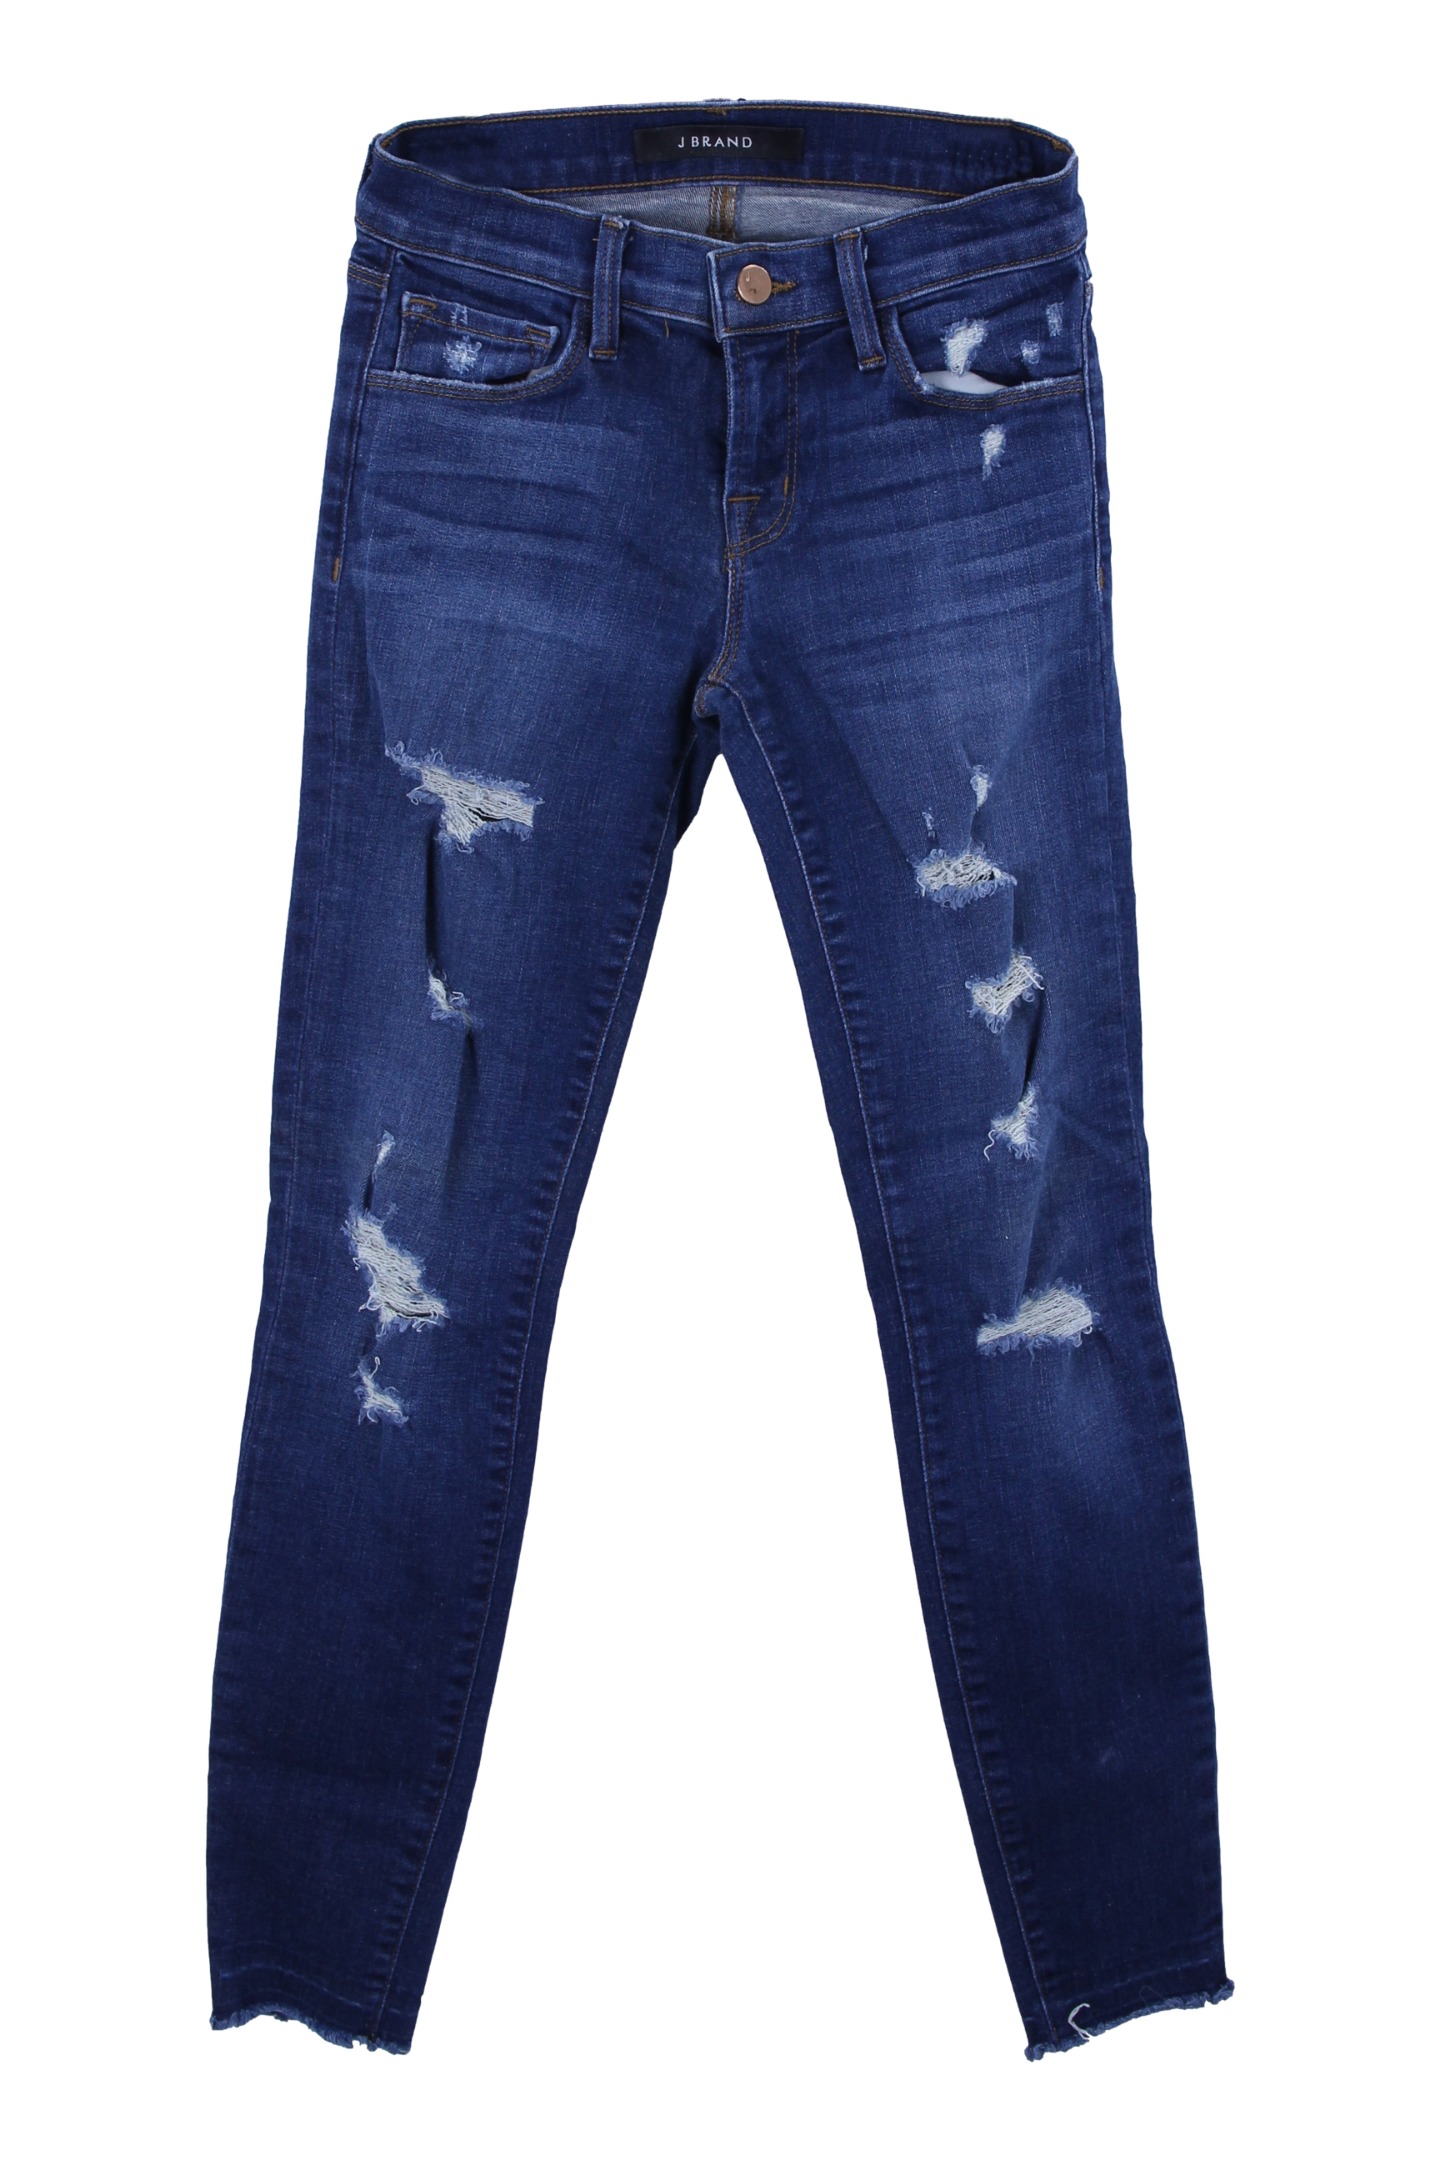 Calça J Brand Jeans Destroyed Azul Original - AAOI1